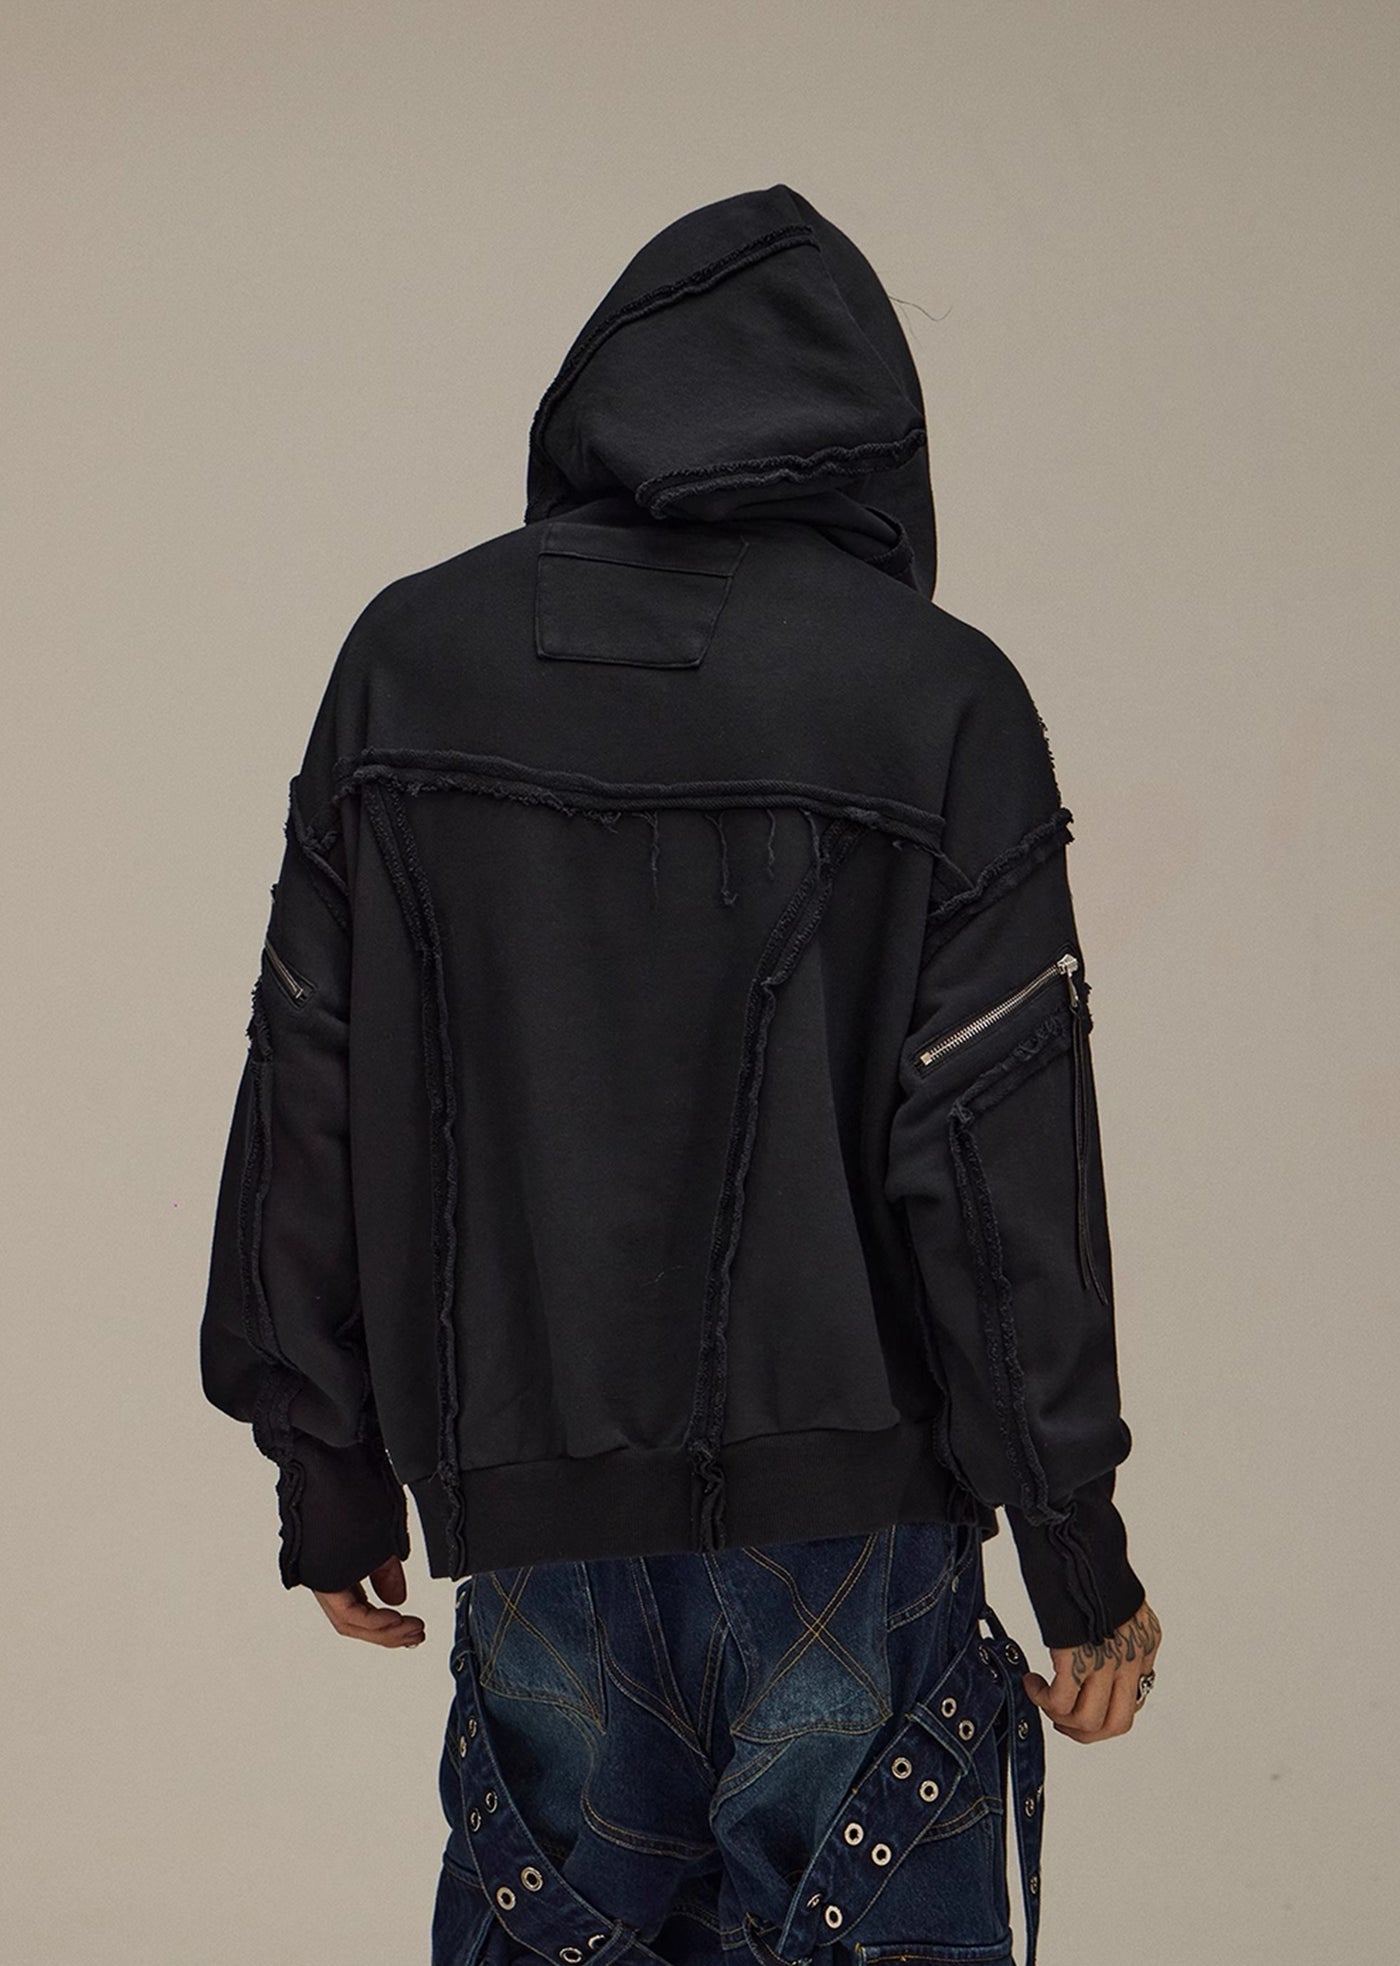 【FLYERRER】Diagonal full zip design mode street style under jacket  FE0007